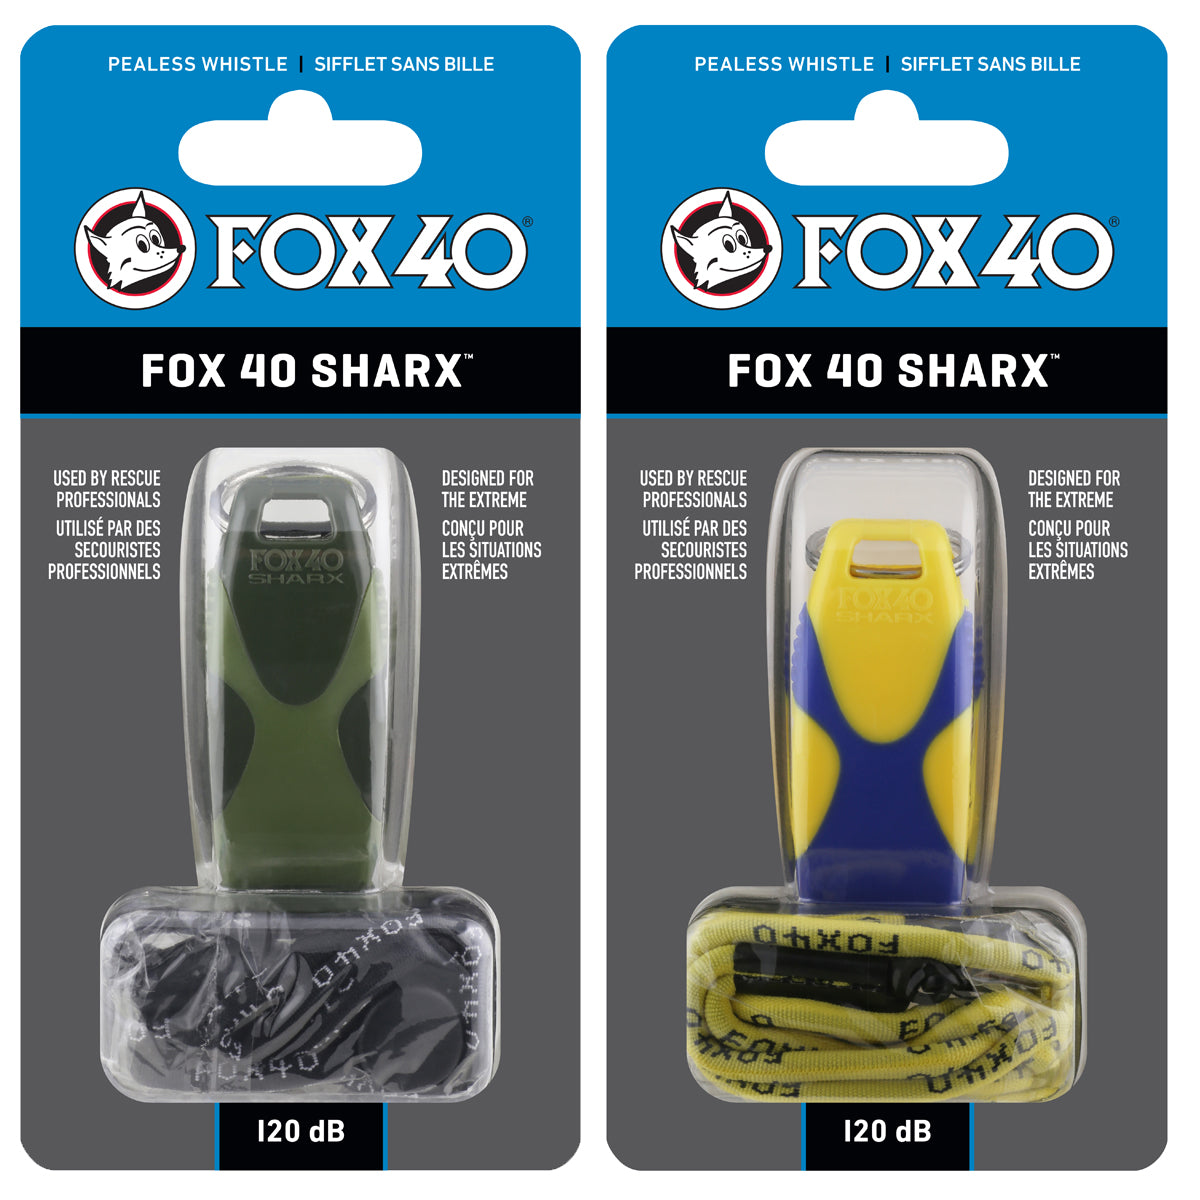 Sifflet Fox 40 sharx